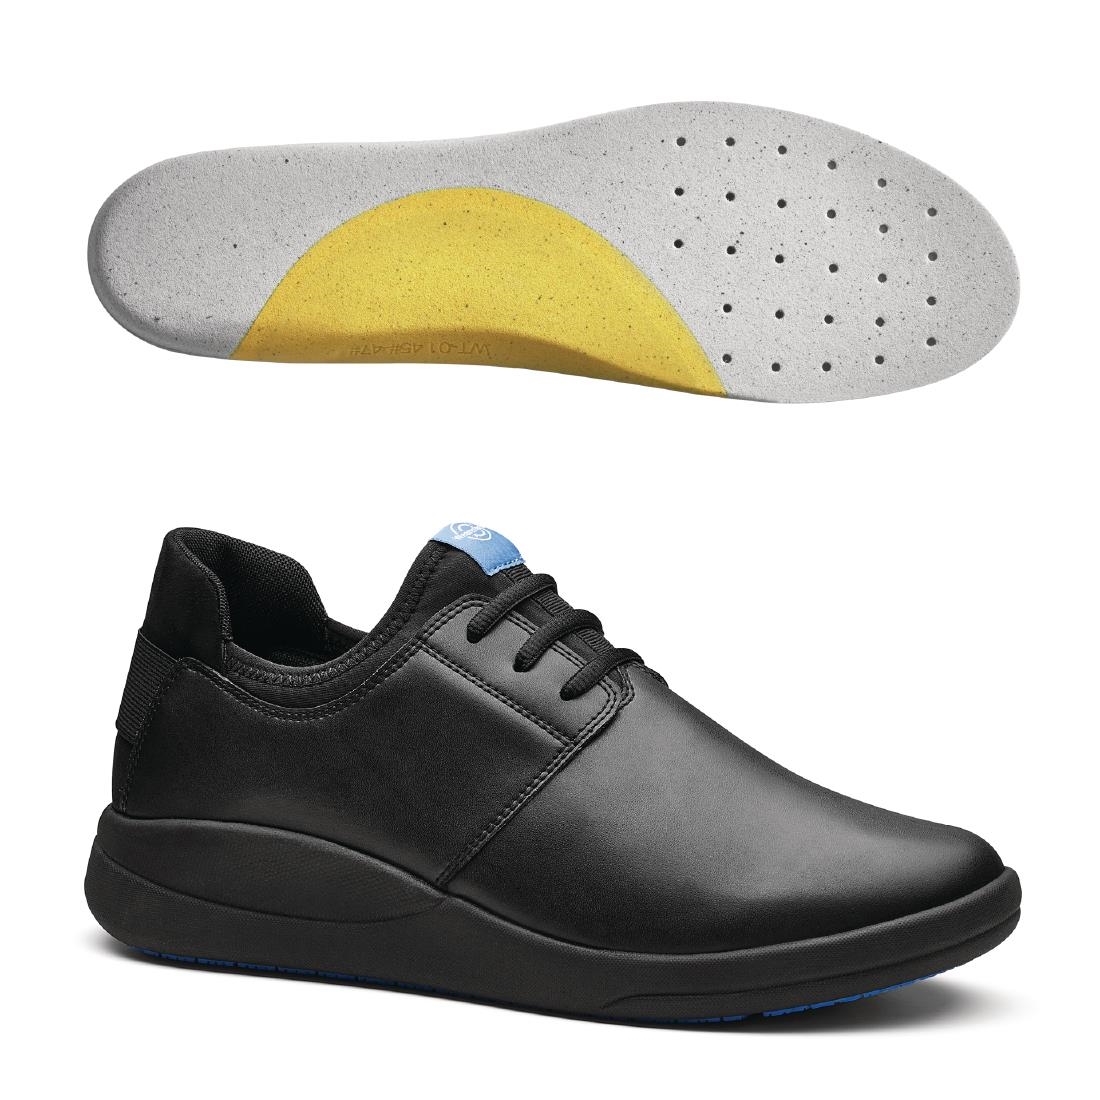 WearerTech Relieve Shoe Black with Soft Insoles Size 37